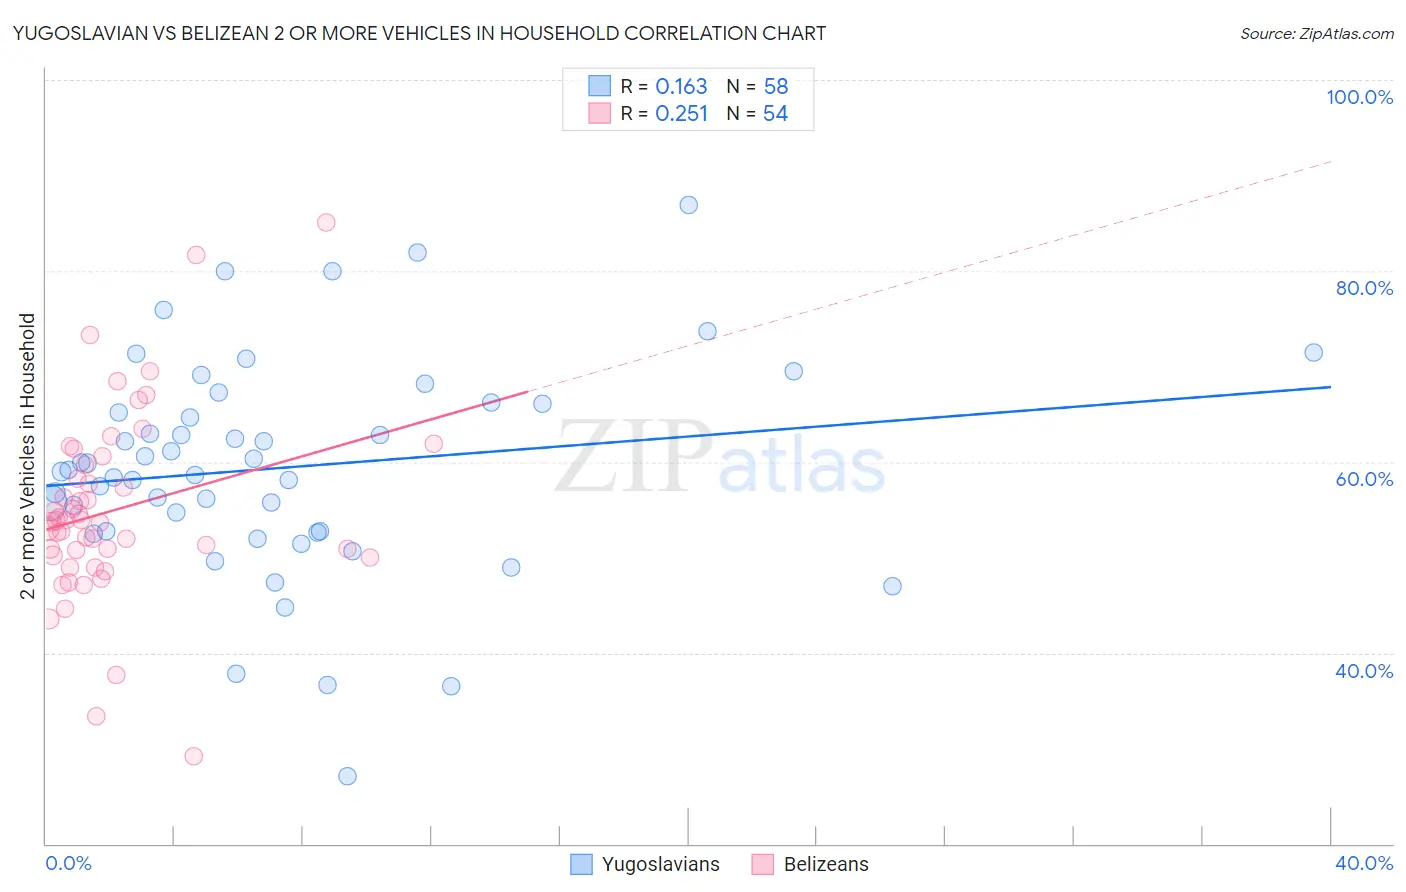 Yugoslavian vs Belizean 2 or more Vehicles in Household